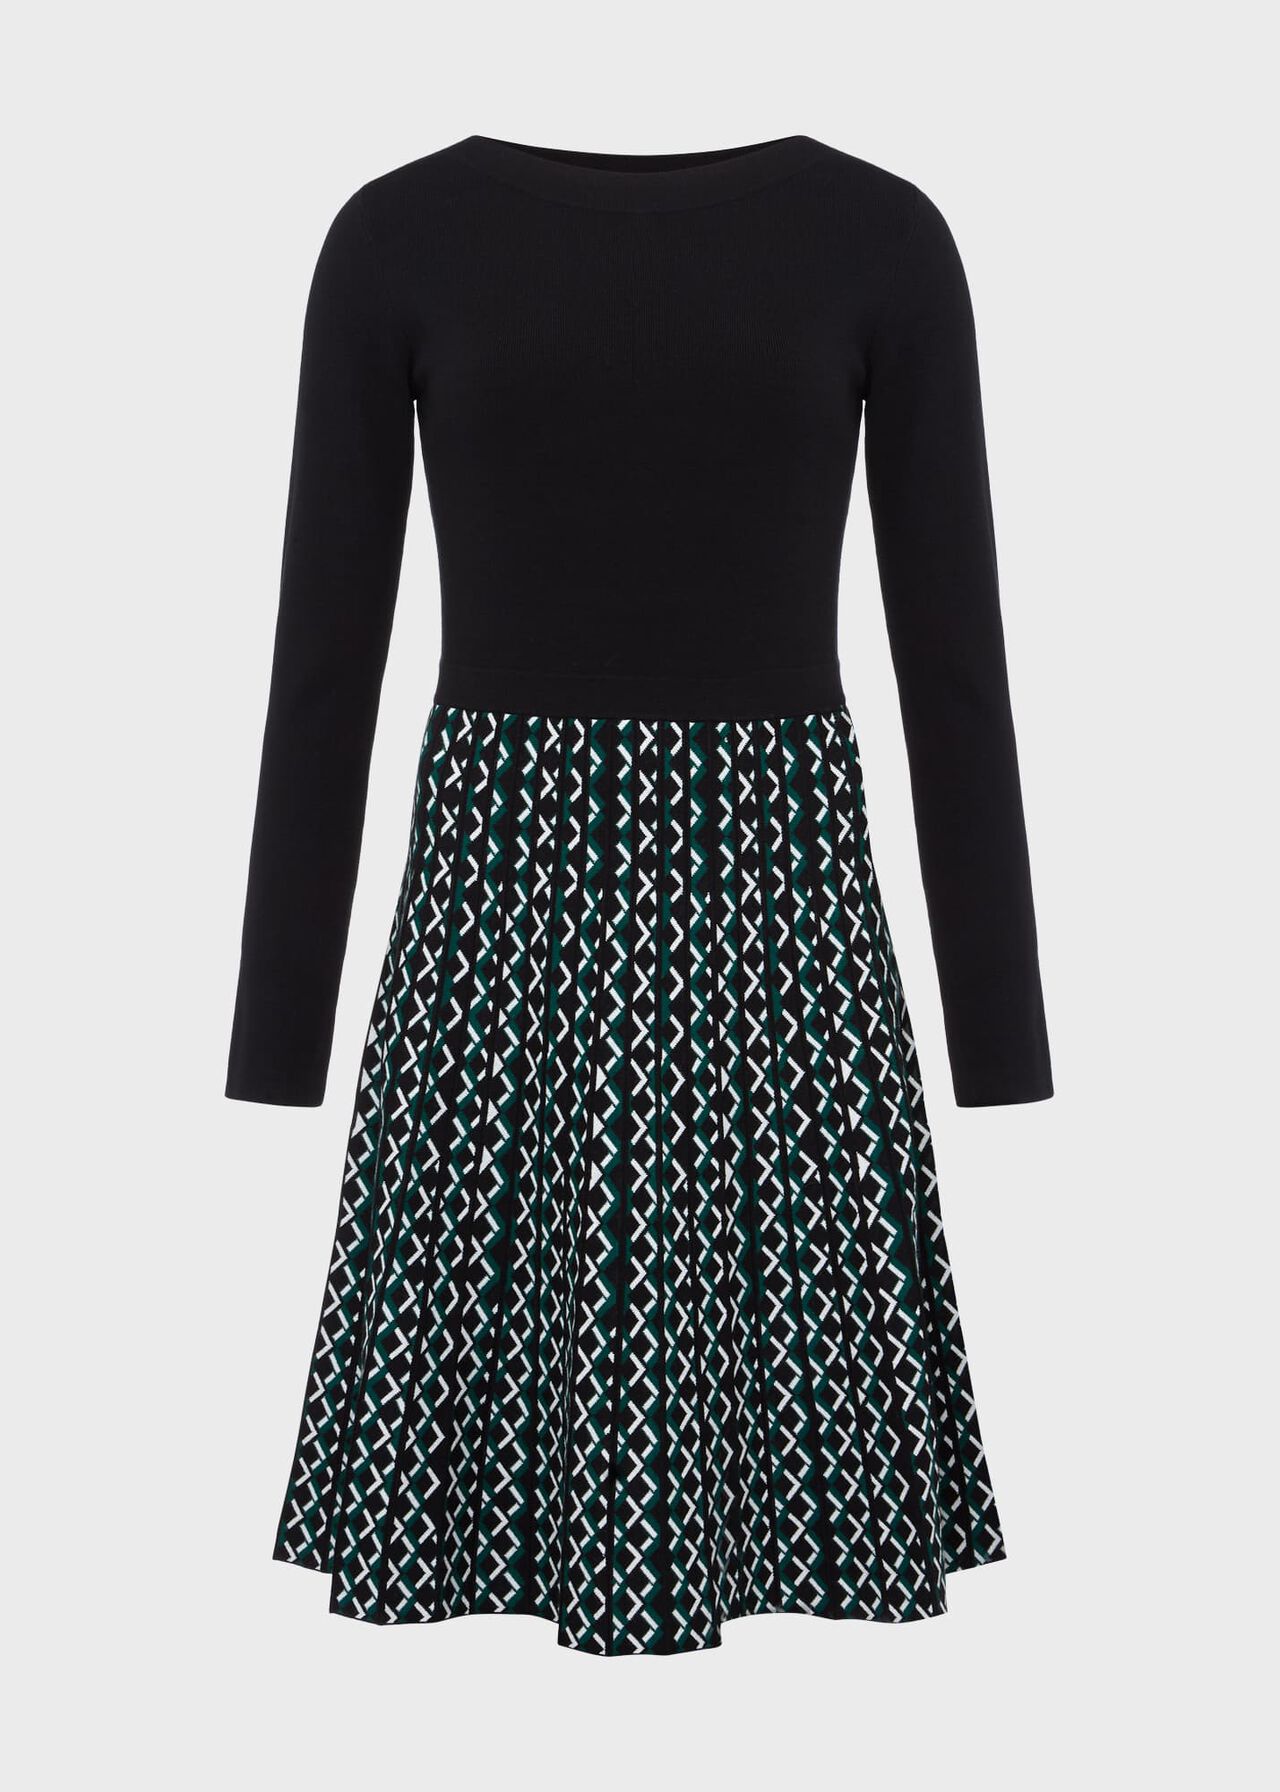 Elena Knitted Dress, Black Green, hi-res